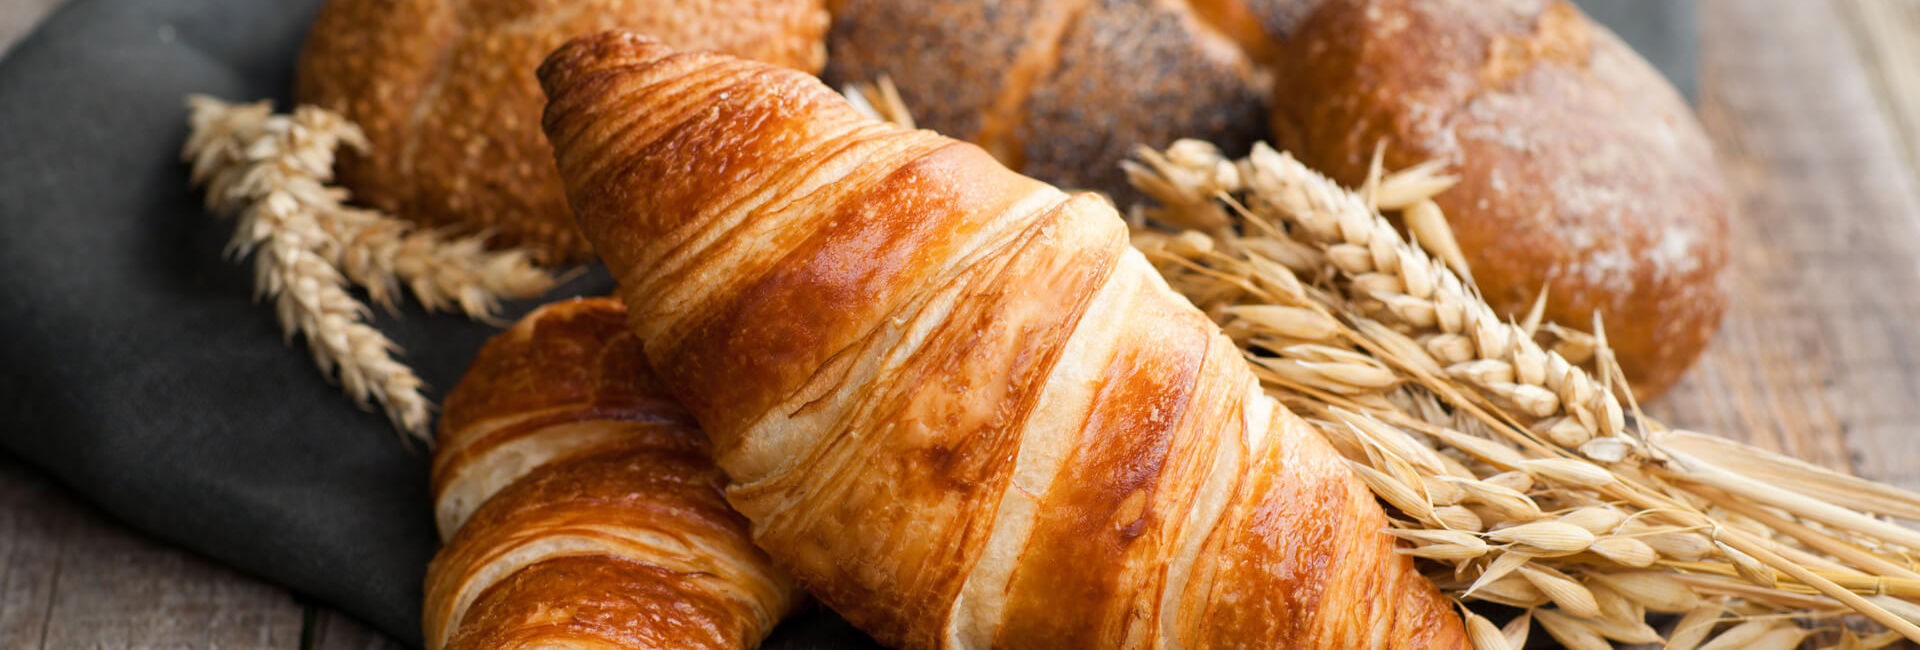 Various types of bread - Gasterij 't Karrewiel